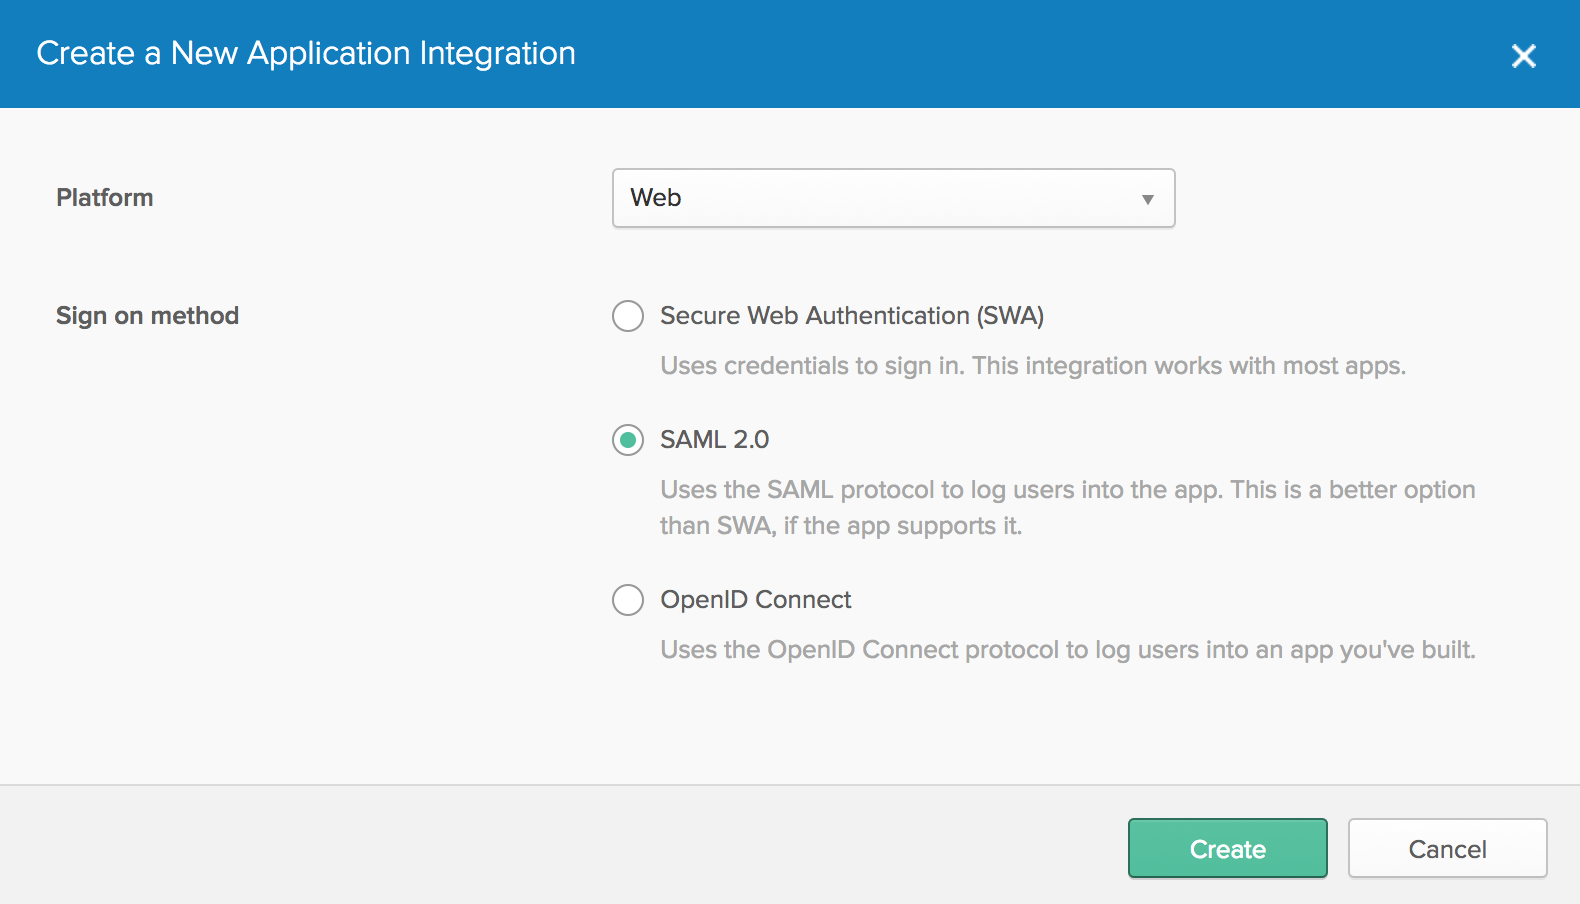 New App with SAML 2.0